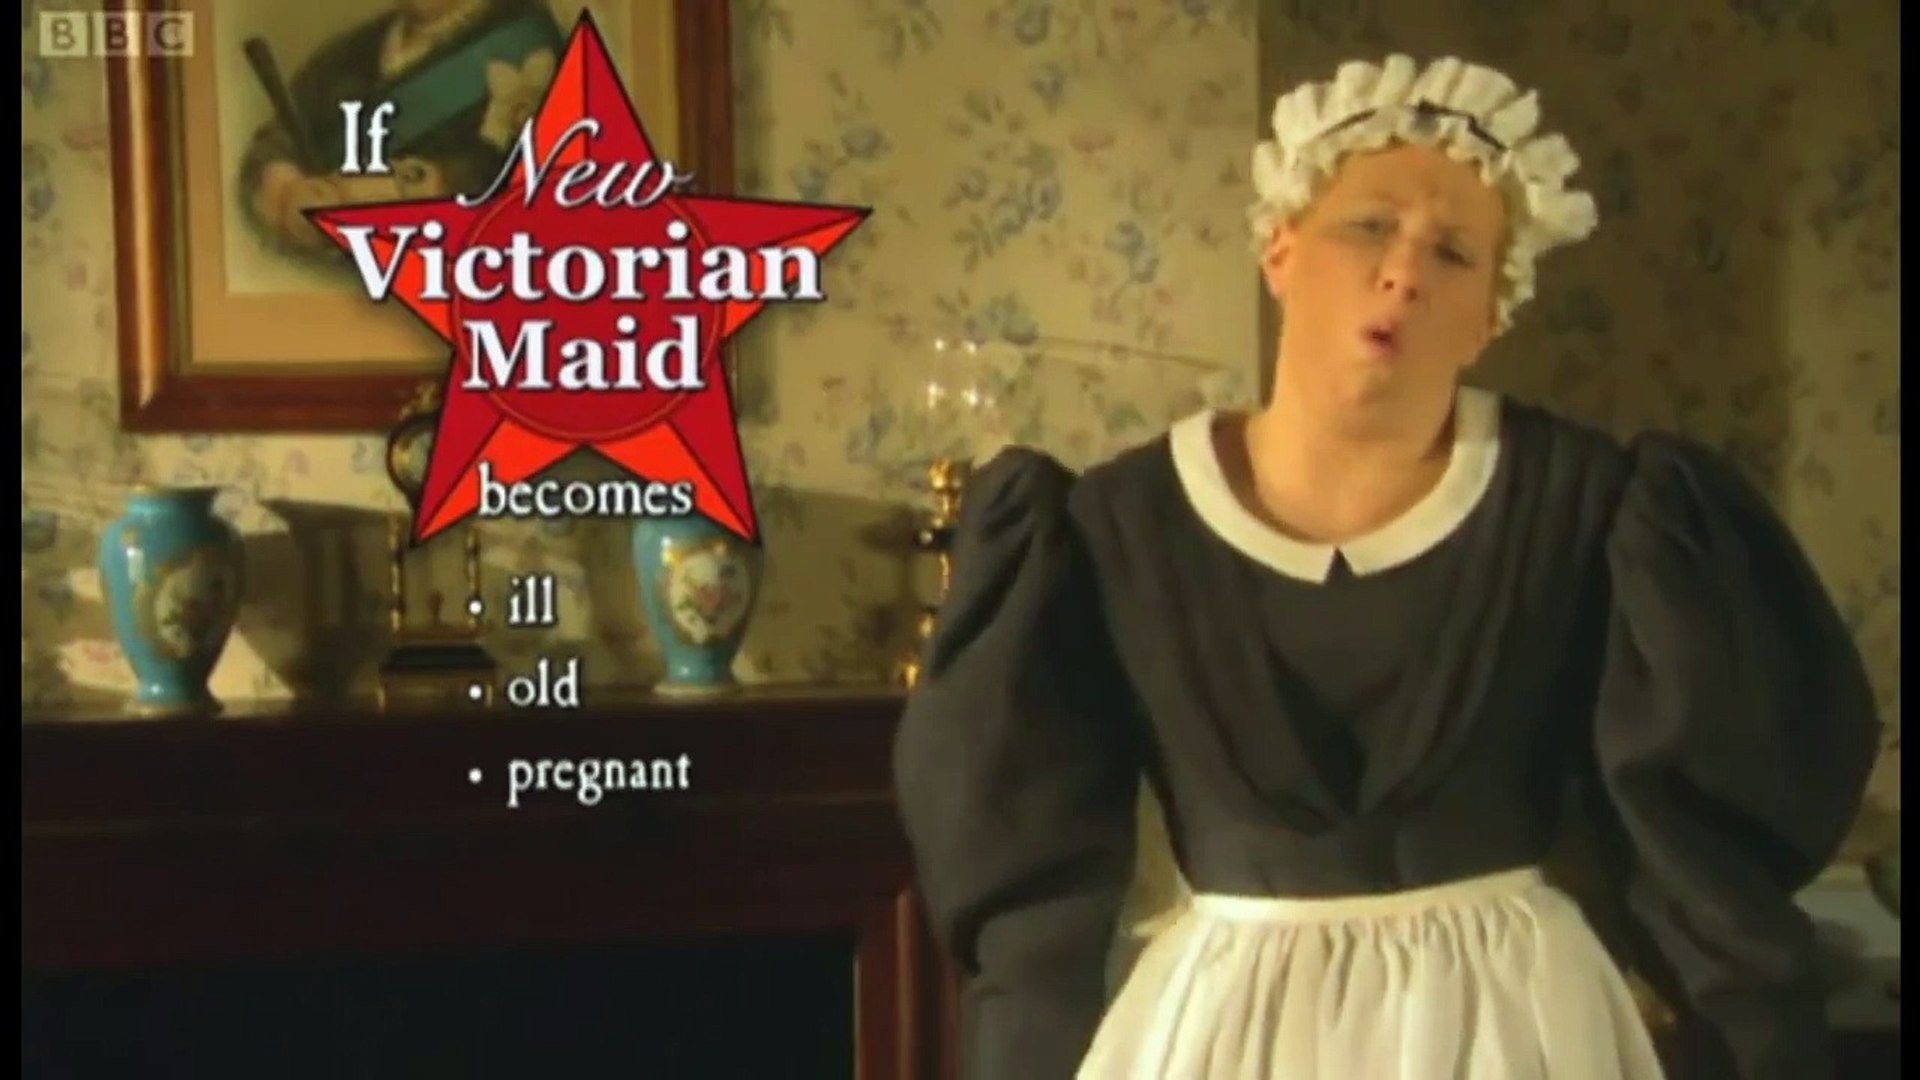 Maid victorian Victorian Servants